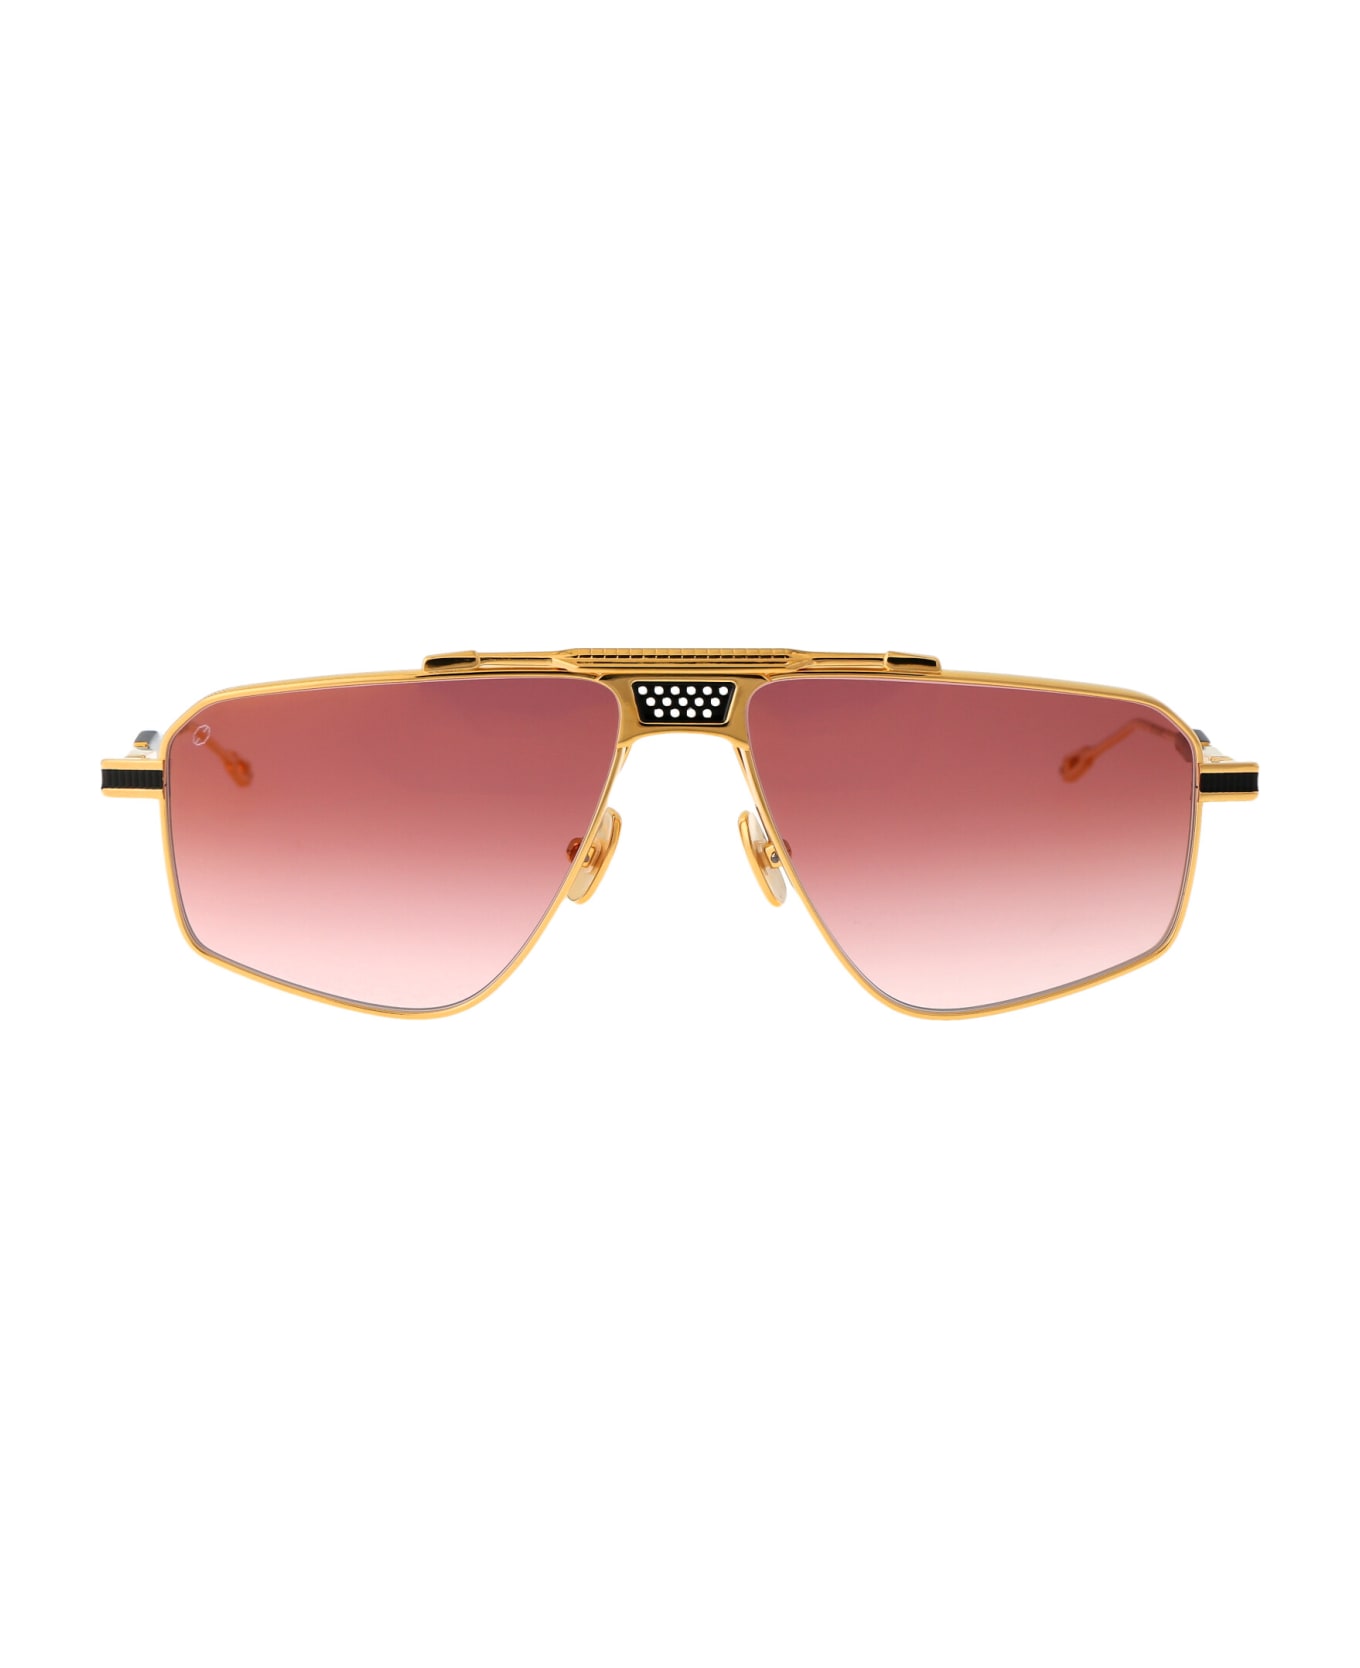 T Henri Drophead Sunglasses - CASINO ROYALE サングラス